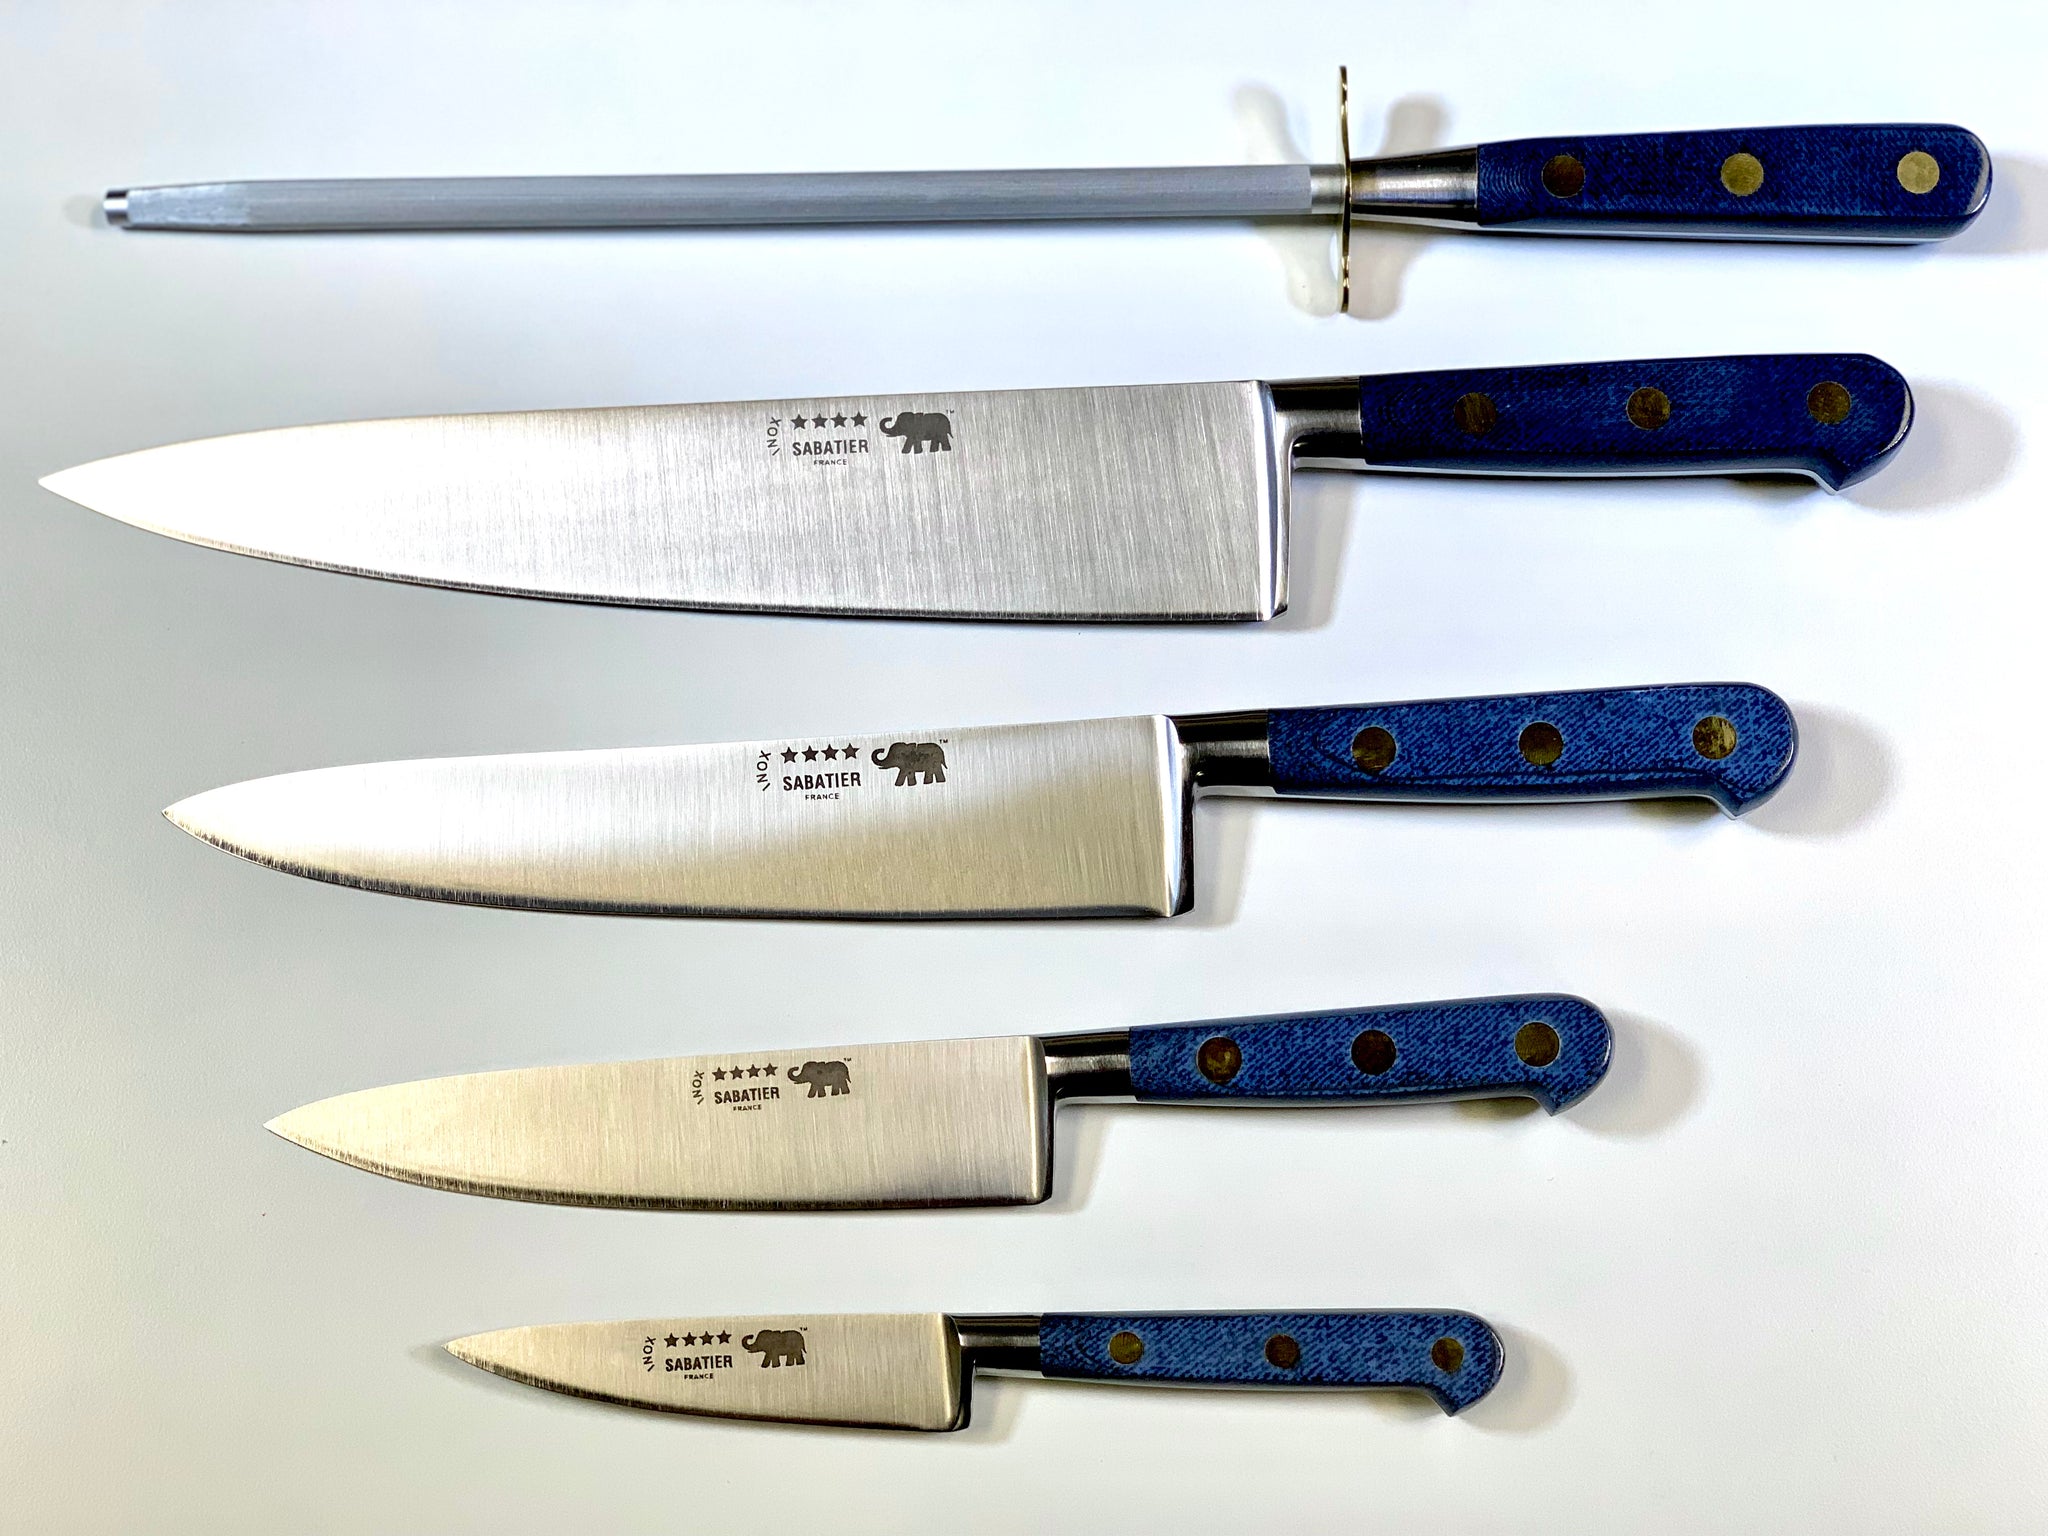 5 Pc Stainless Steel Kitchen Starter Knife Set - Chef Knife, Bread Knife,  Filet Knife, Paring Knife and Free Peeler 